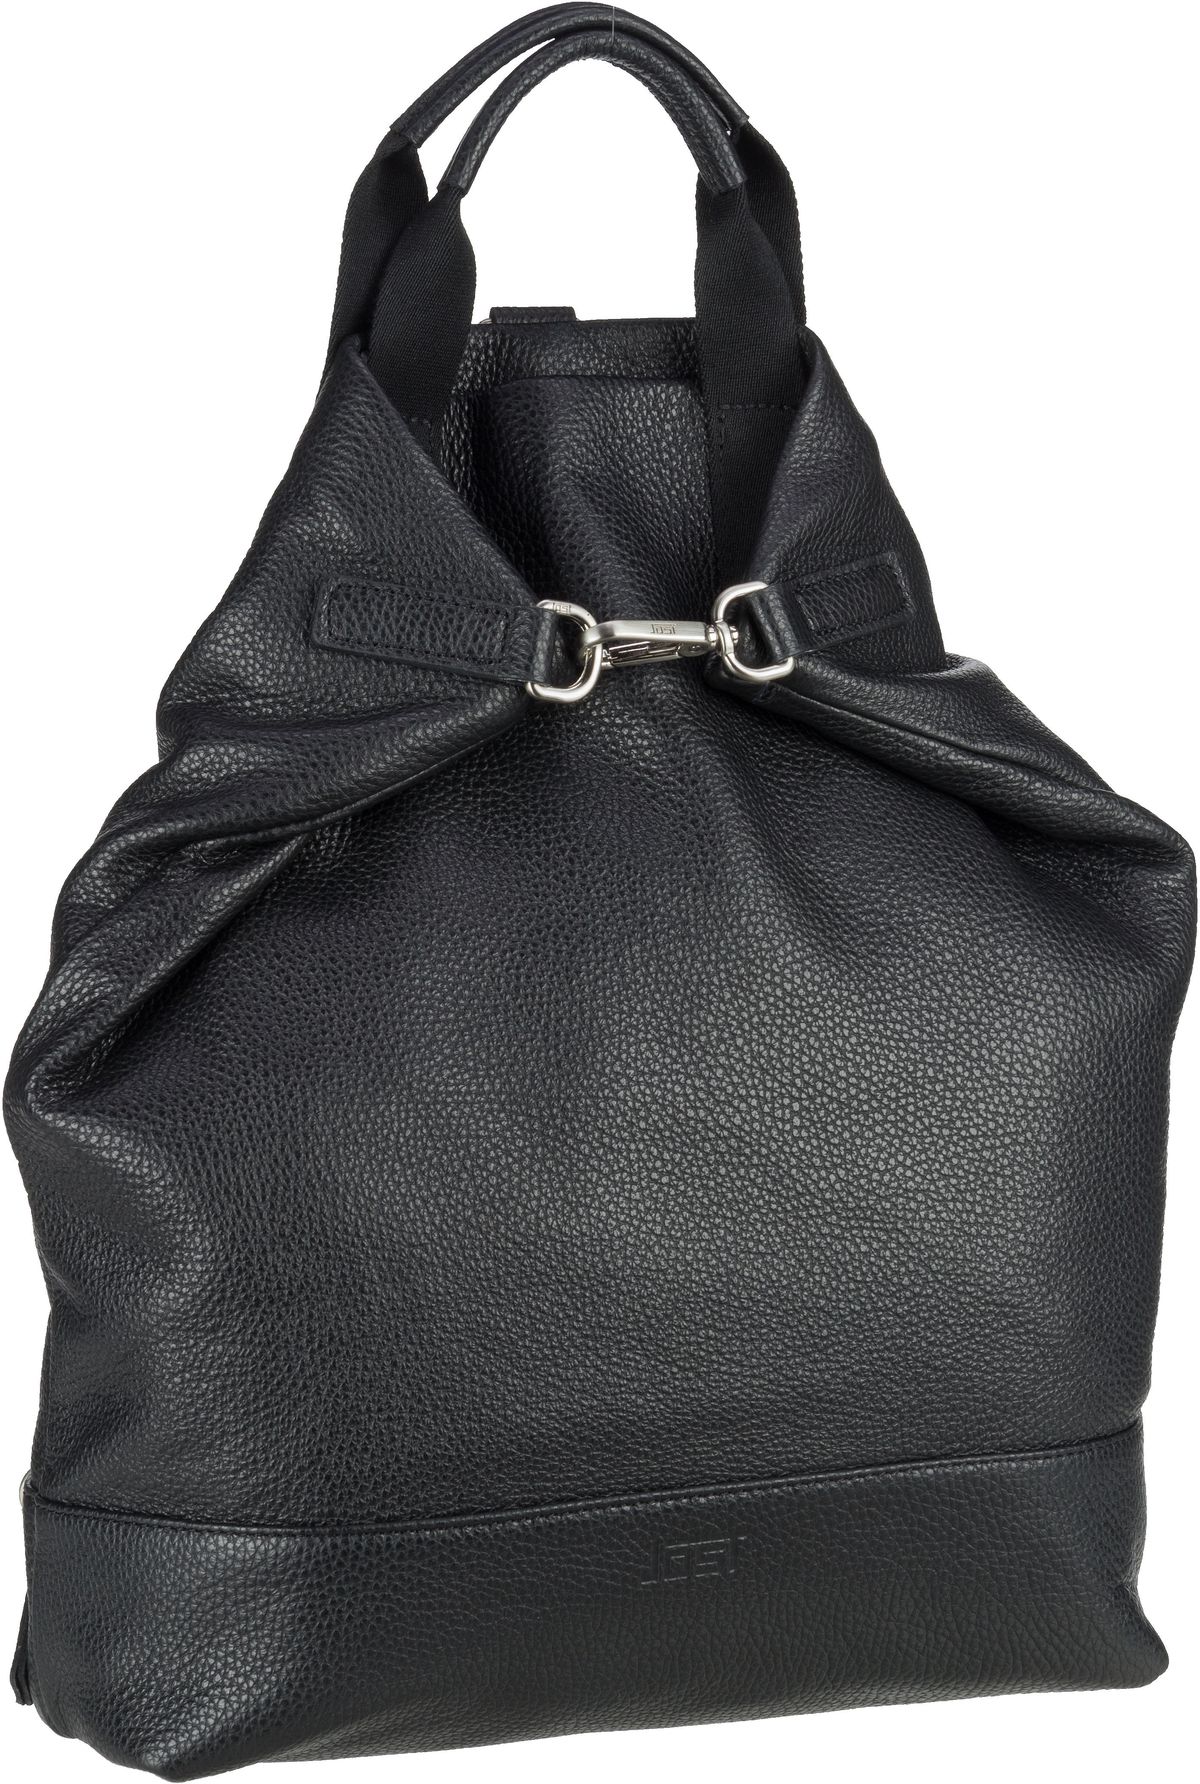 Jost Vika X-Change Bag S - Black